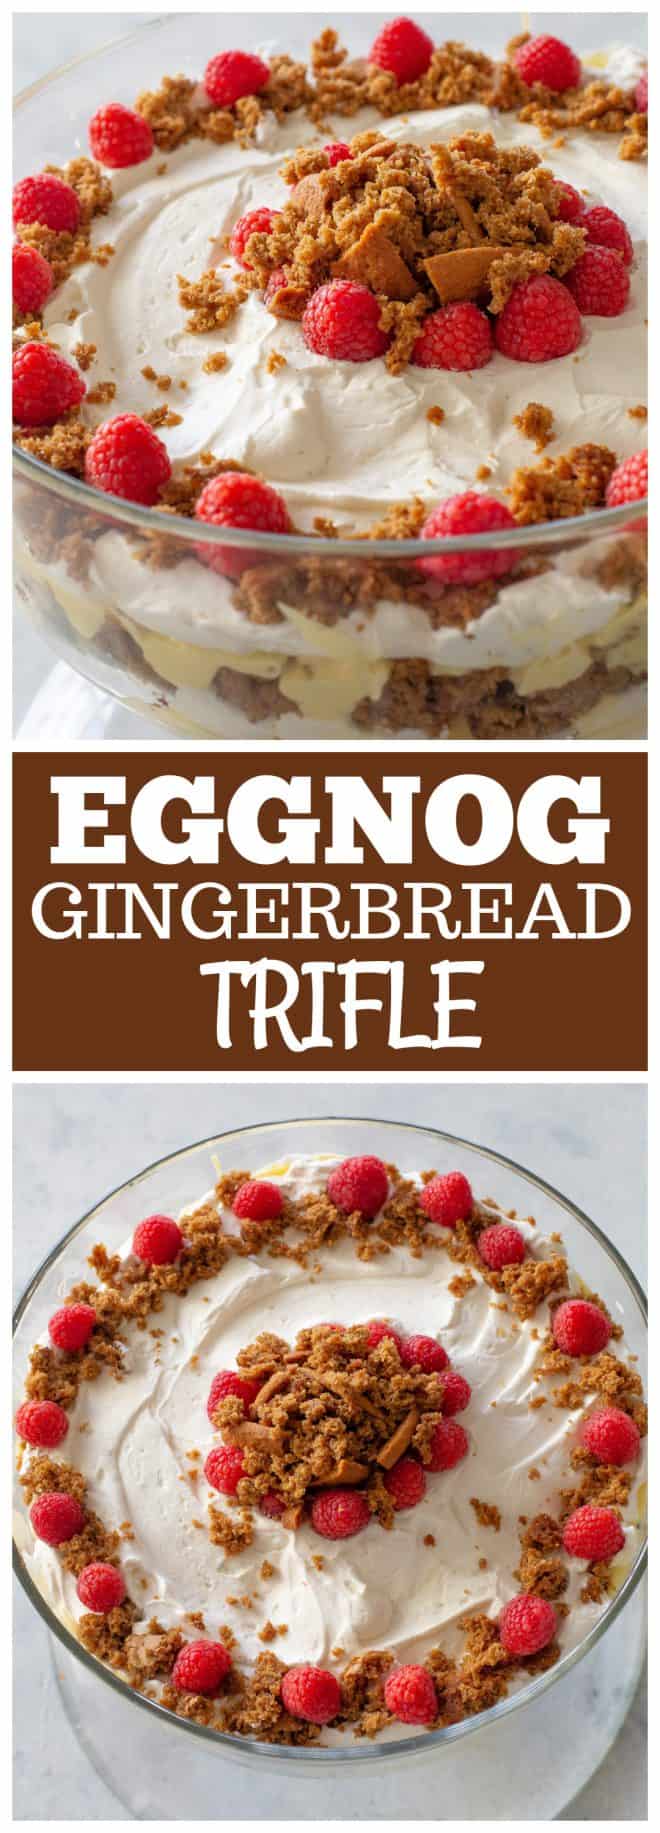 eggnog gingerbread trifle